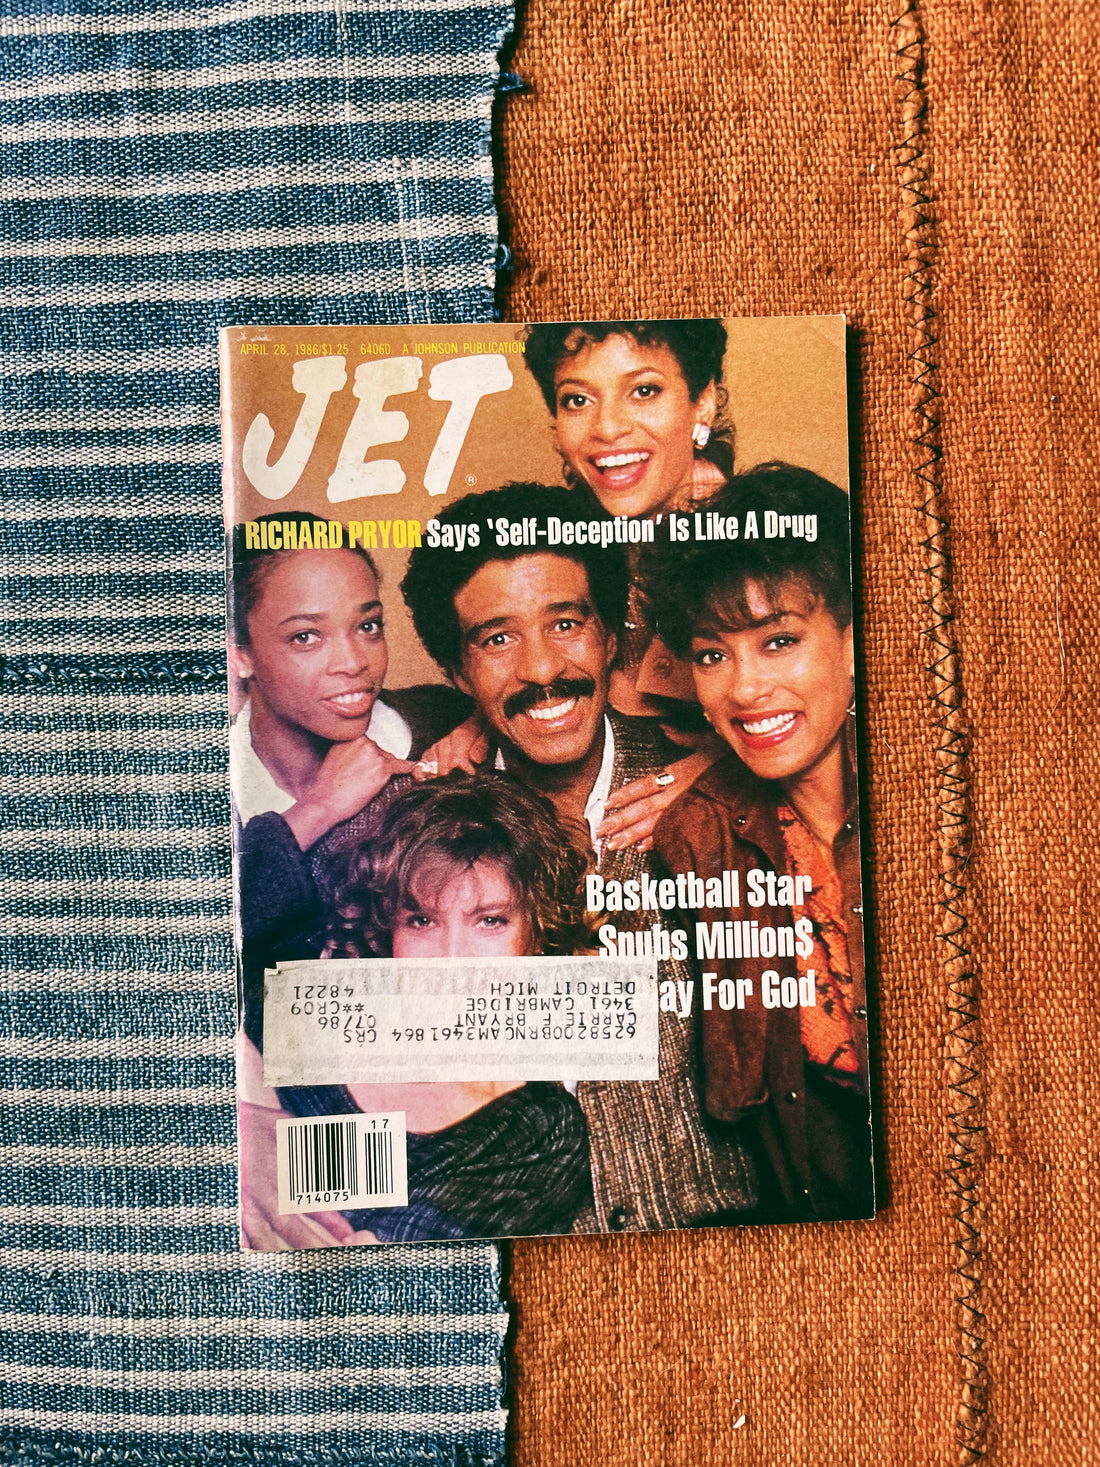 Vintage Jet Magazines // Richard Pryor Covers (Please select)